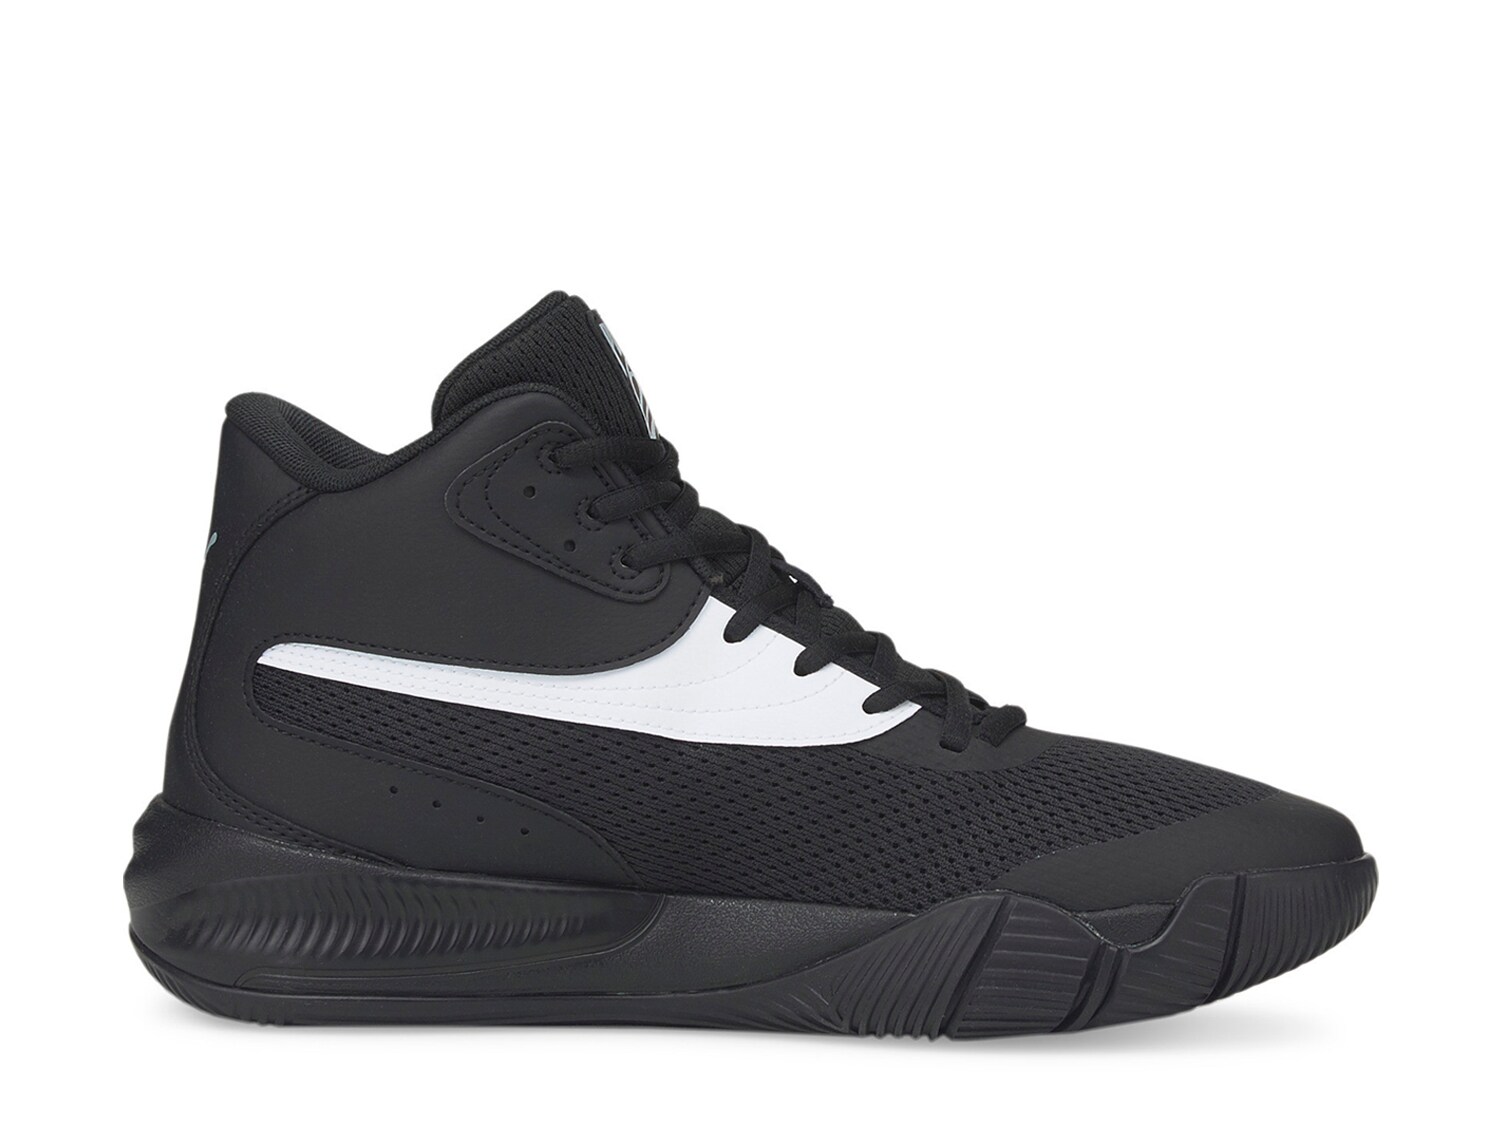 Puma Triple Basketball Shoes Black